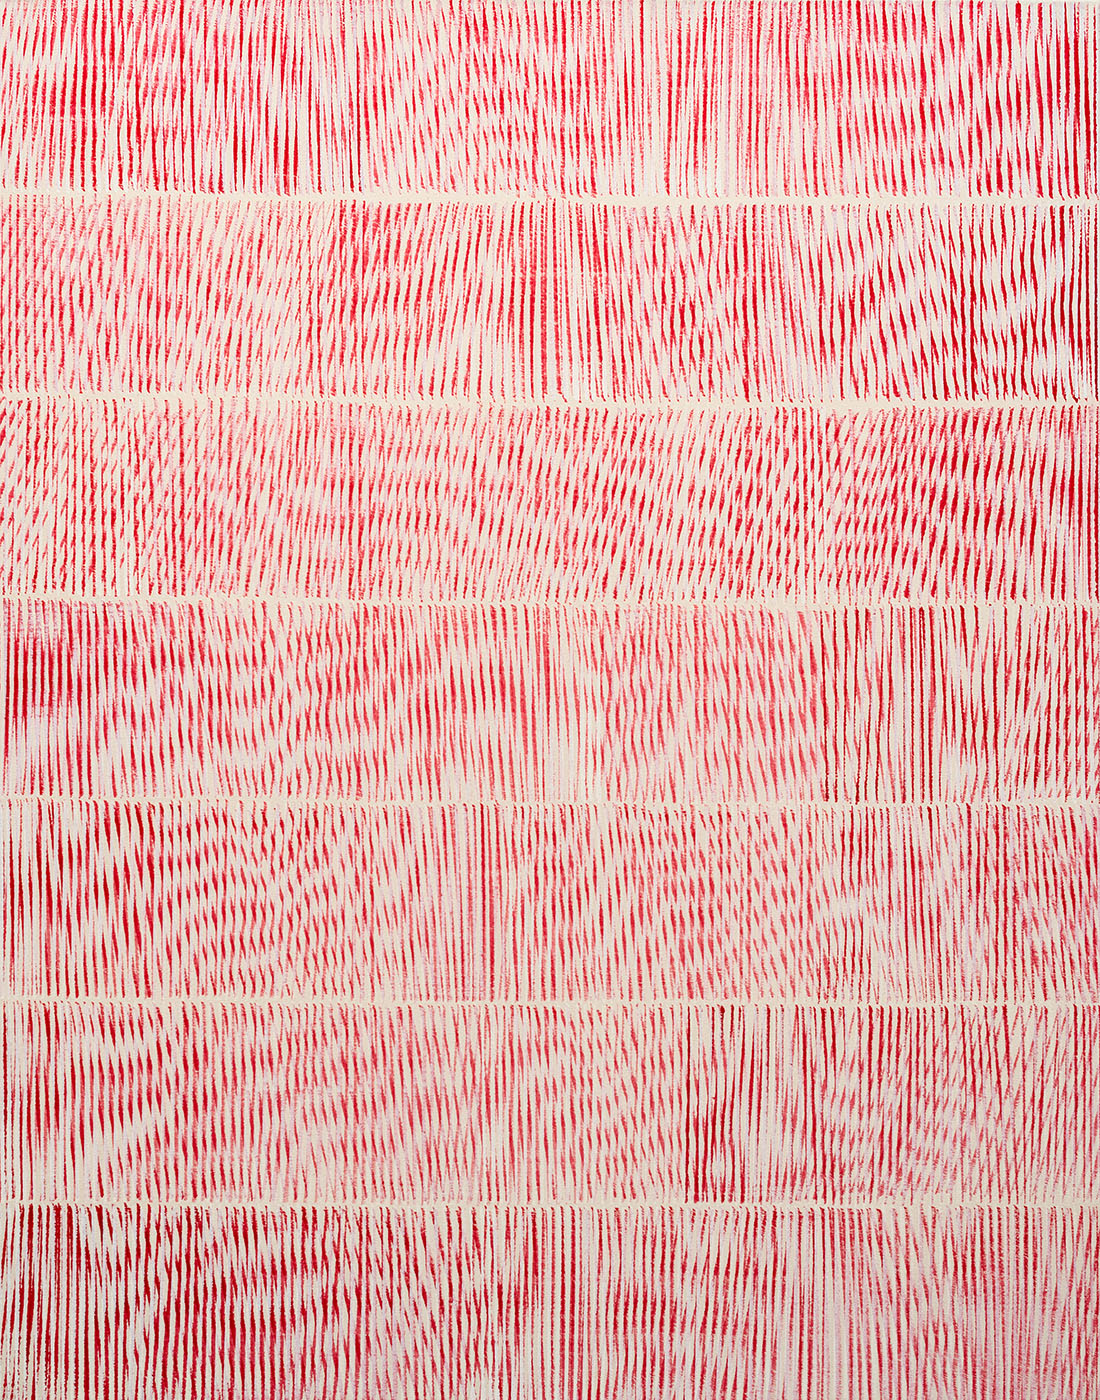 Nikola Dimitrov, Cassandra I, 2019, Pigmente, Bindemittel auf Leinwand, 140 × 110 cm